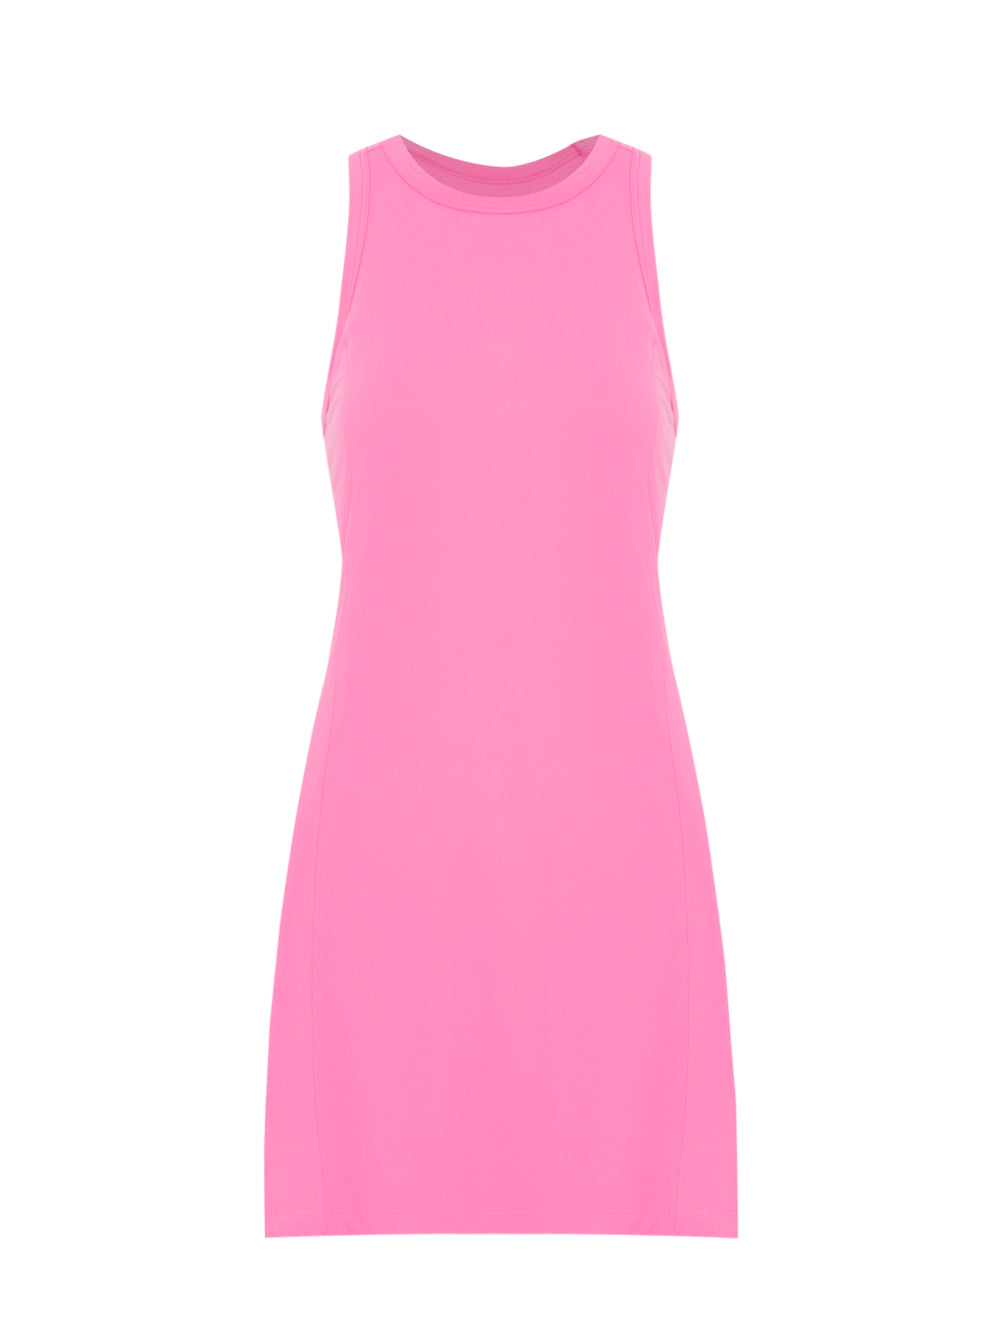 Balance Compression Racerback Tennis Dress With Built In Bra (Azalea Pink)